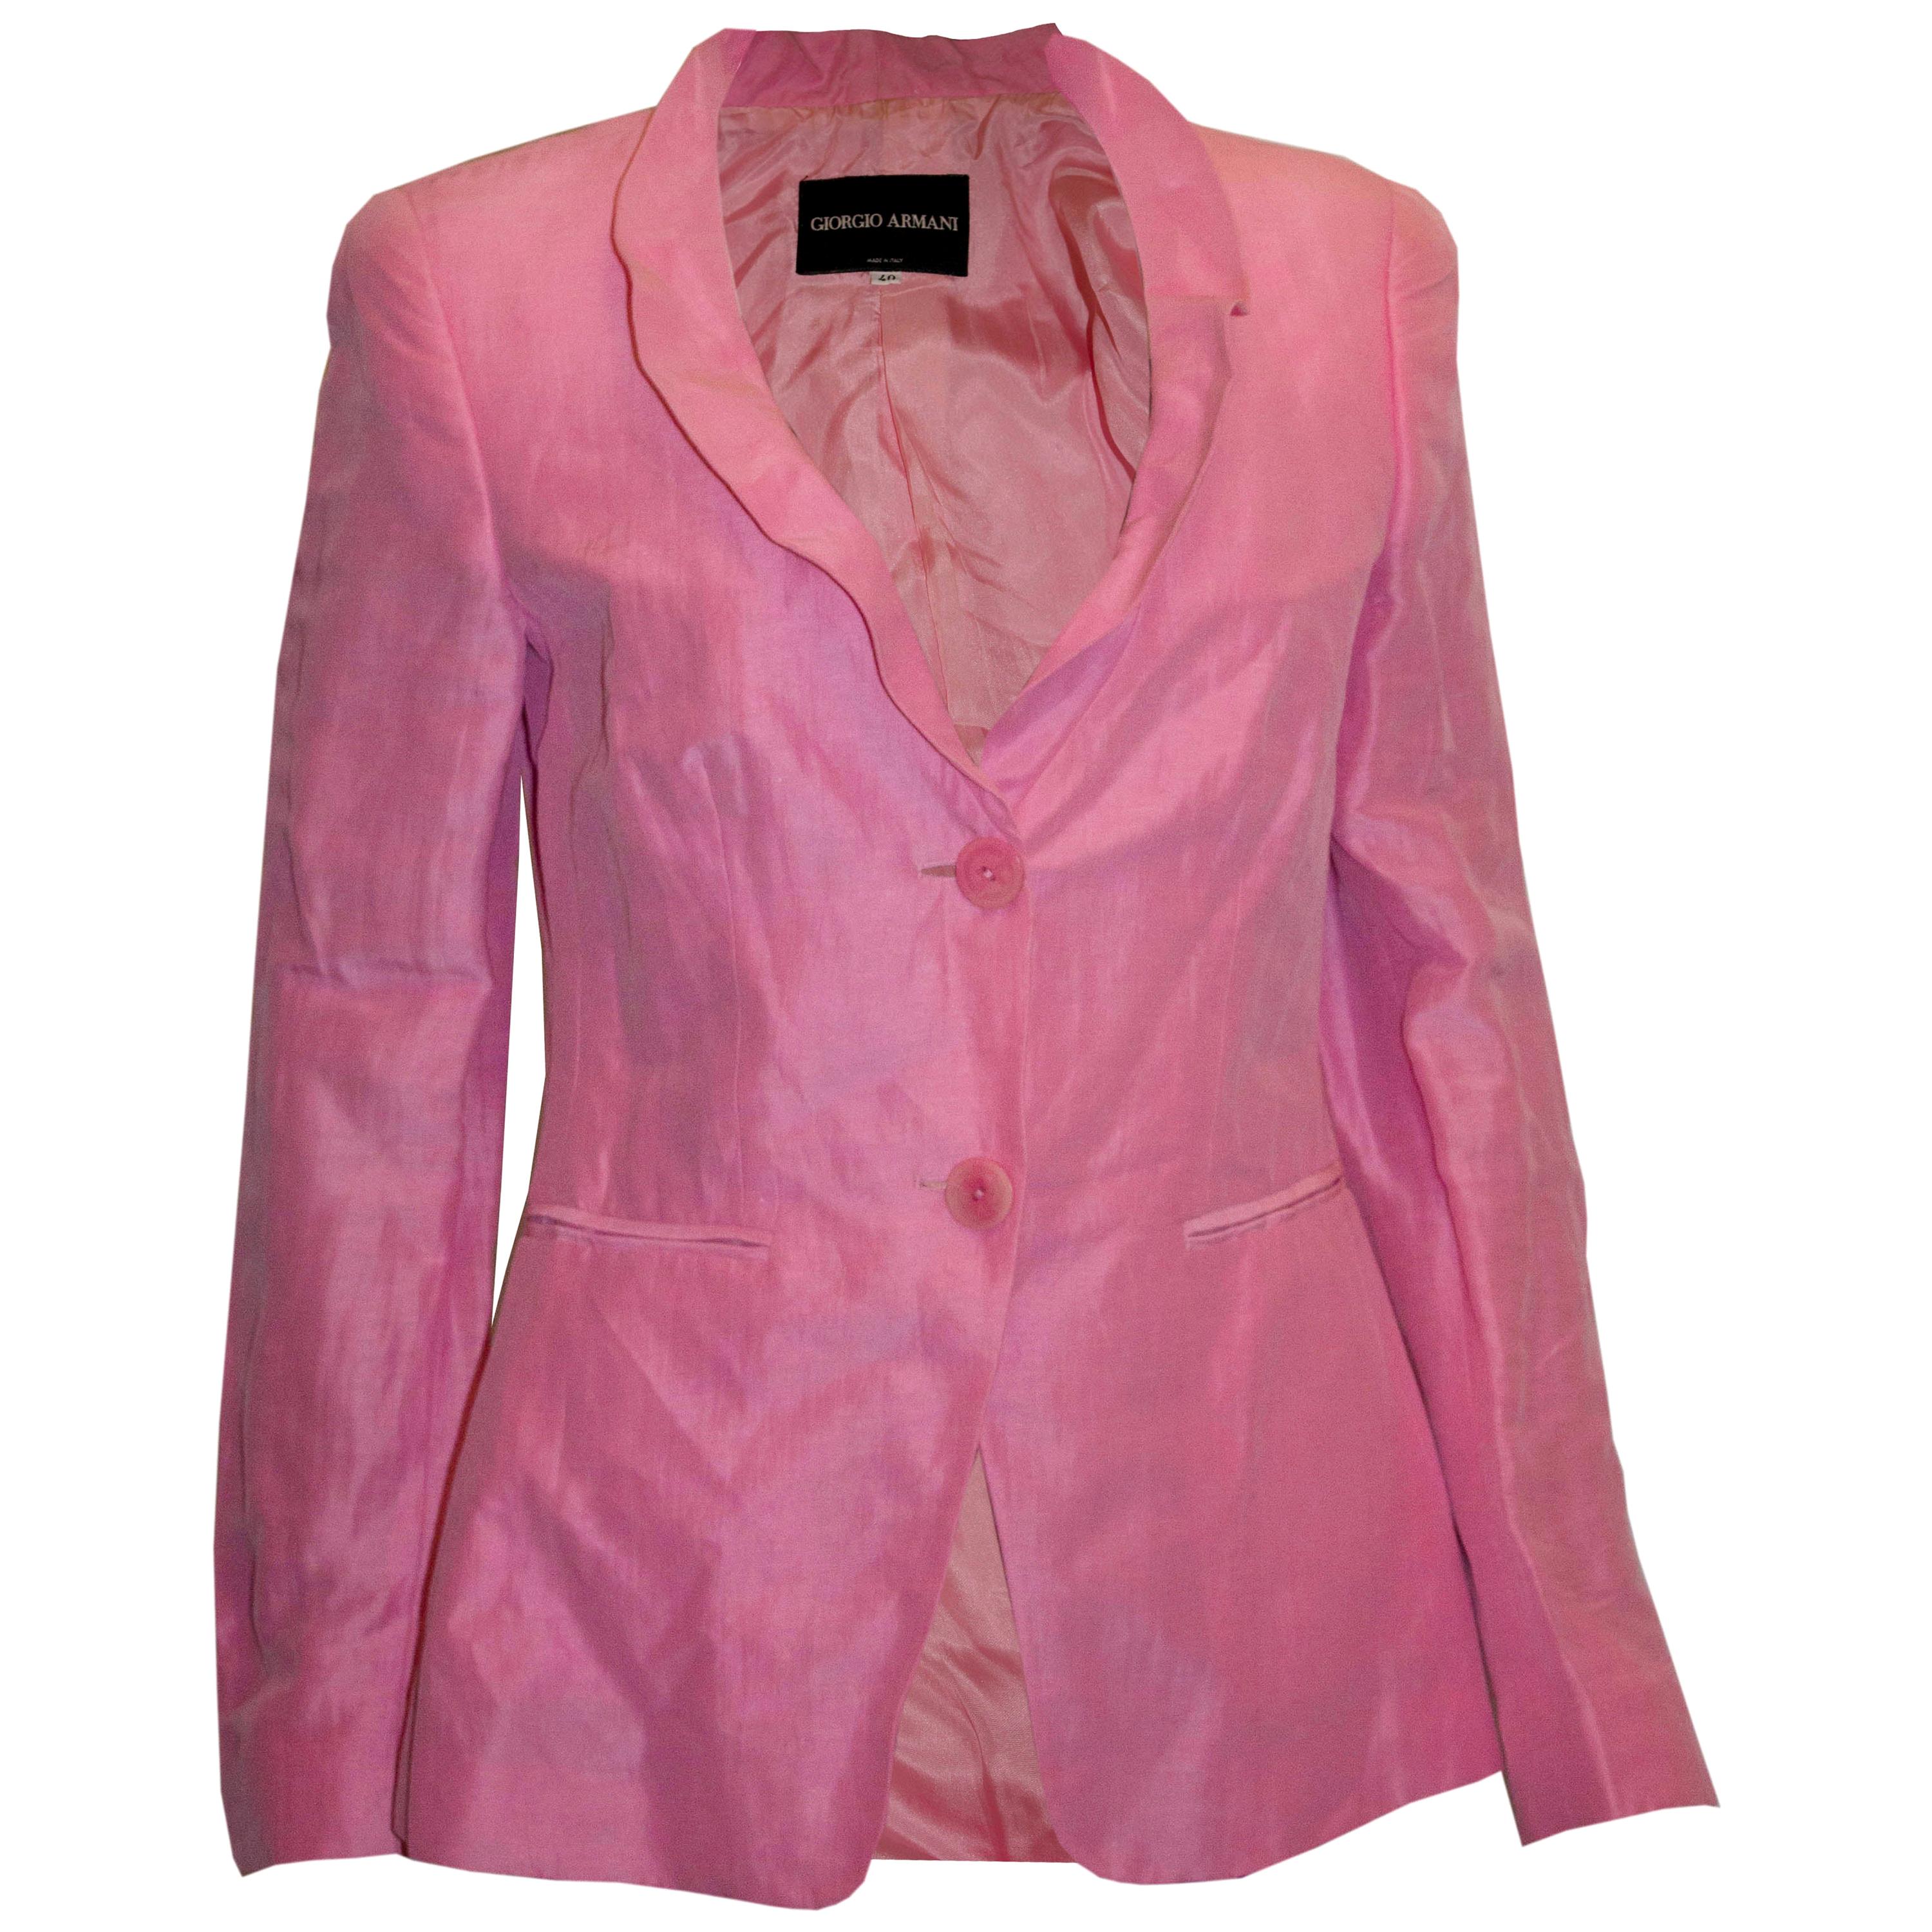 Vintage Giorgio Armani Pink Jacket For Sale